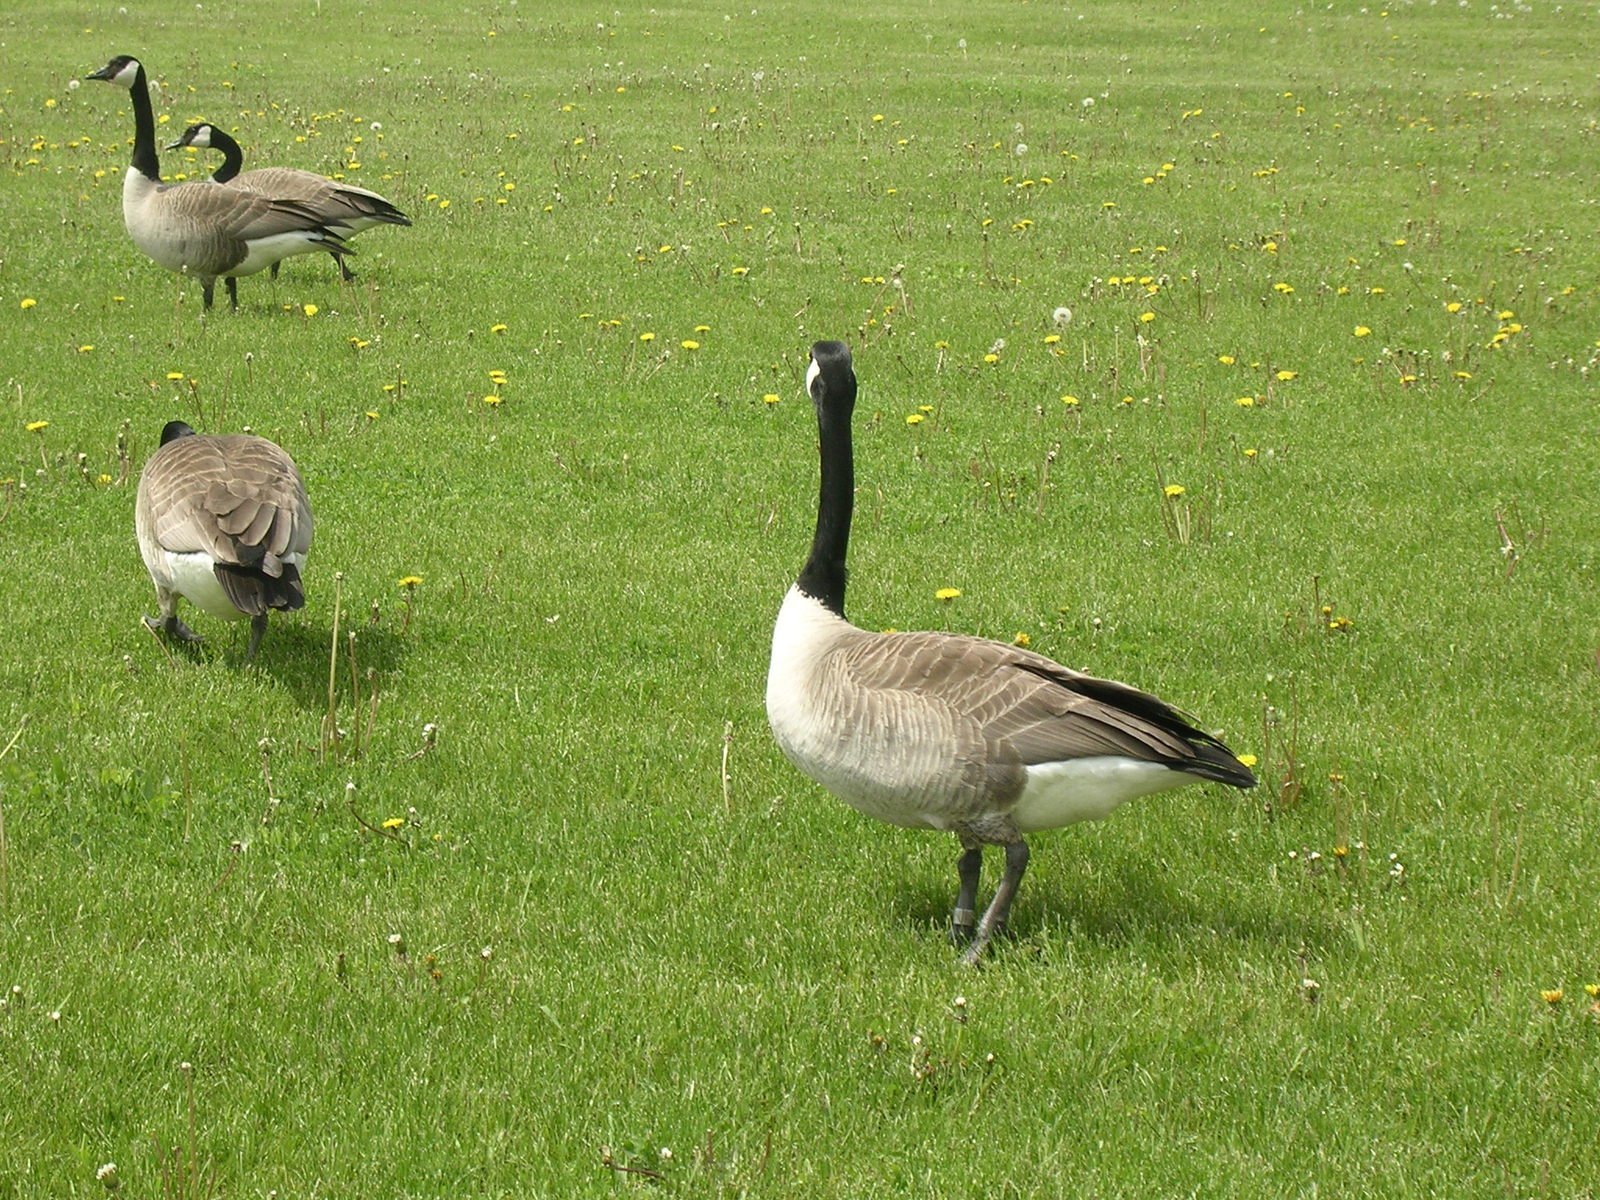 three geese walk across grass in a field